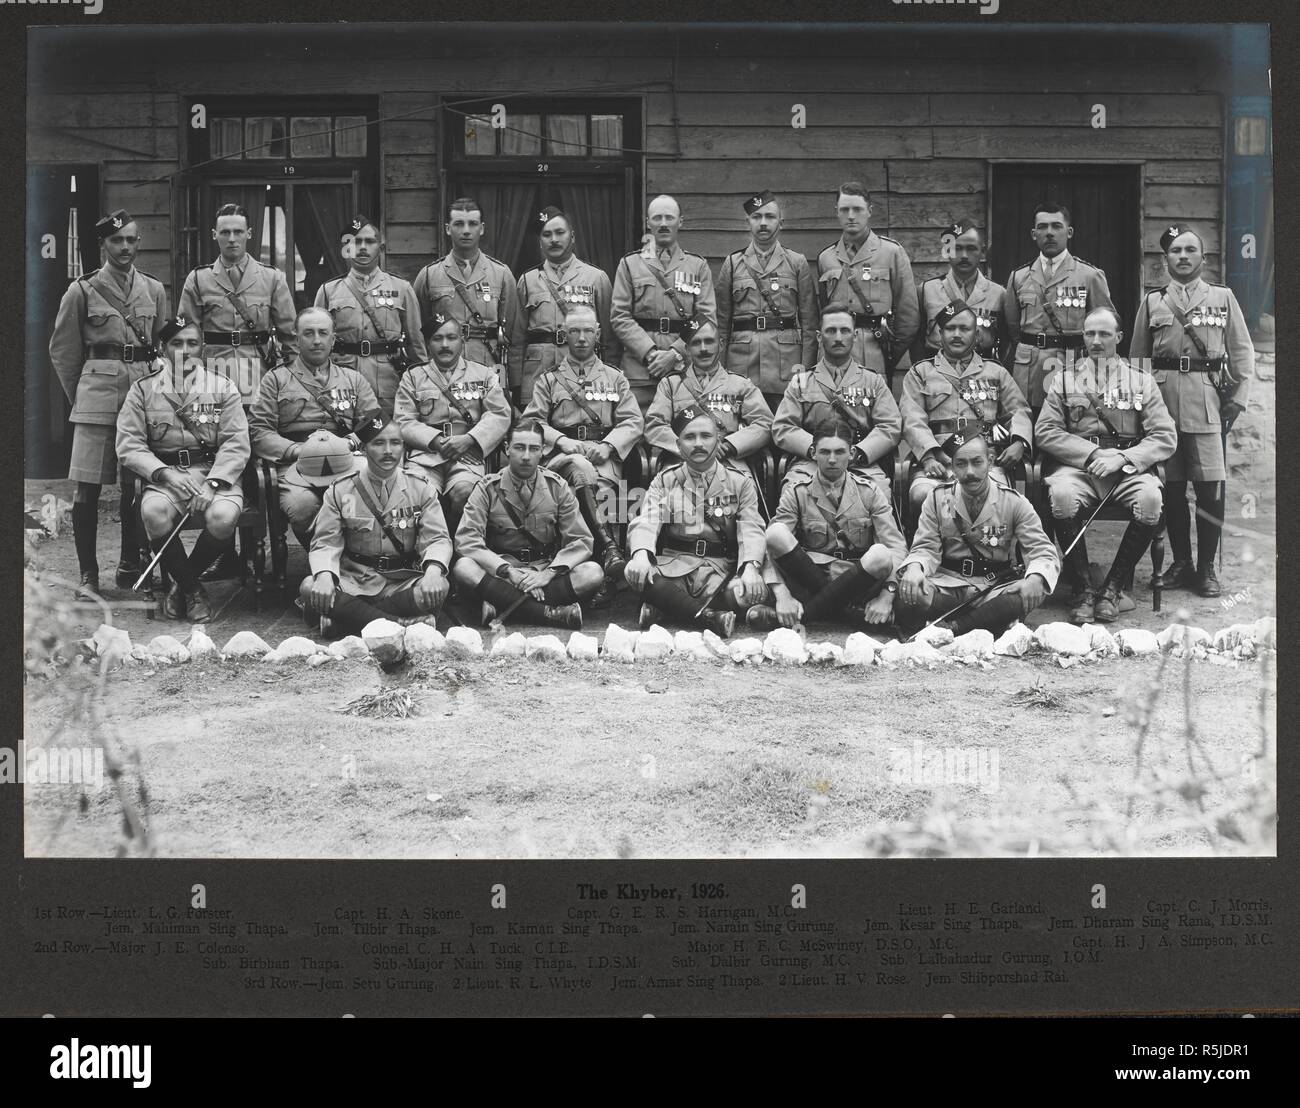 The Khyber, 18 Februrary 1926. Formally posed group of British and Gurkha officers of the 3rd Gurkha Rifles, Identified as follows: (1st row, back): Lieut. L.G. Forster; Capt. H.A. Skone; Capt. G.E.R.S. Hartigan M.C.; Lieut. H.E. Garland; Capt. C.J. Morris; Jem. Mahiman Sing Thapa; Jem. Tilbir Thapa; Jem. Kaman Sing Thapa; Jem. Narain Sing Gurung; Jem. Kasar Sing Thapa; Jem. Dharam Sing Rana I.D.S.M. (2nd row): Major J.E. Colenso; Colonel C.H.A. Tuck C.I.E.; Major H.F.C. McSwiney D.S.O., M.C.; Capt. H.J.A. Simpson M.C.; Sub. Birbhan Thapa; Sub.-Major Nain Sing Thapa I.D.S.M.; Sub. Balbir Gurun Stock Photo